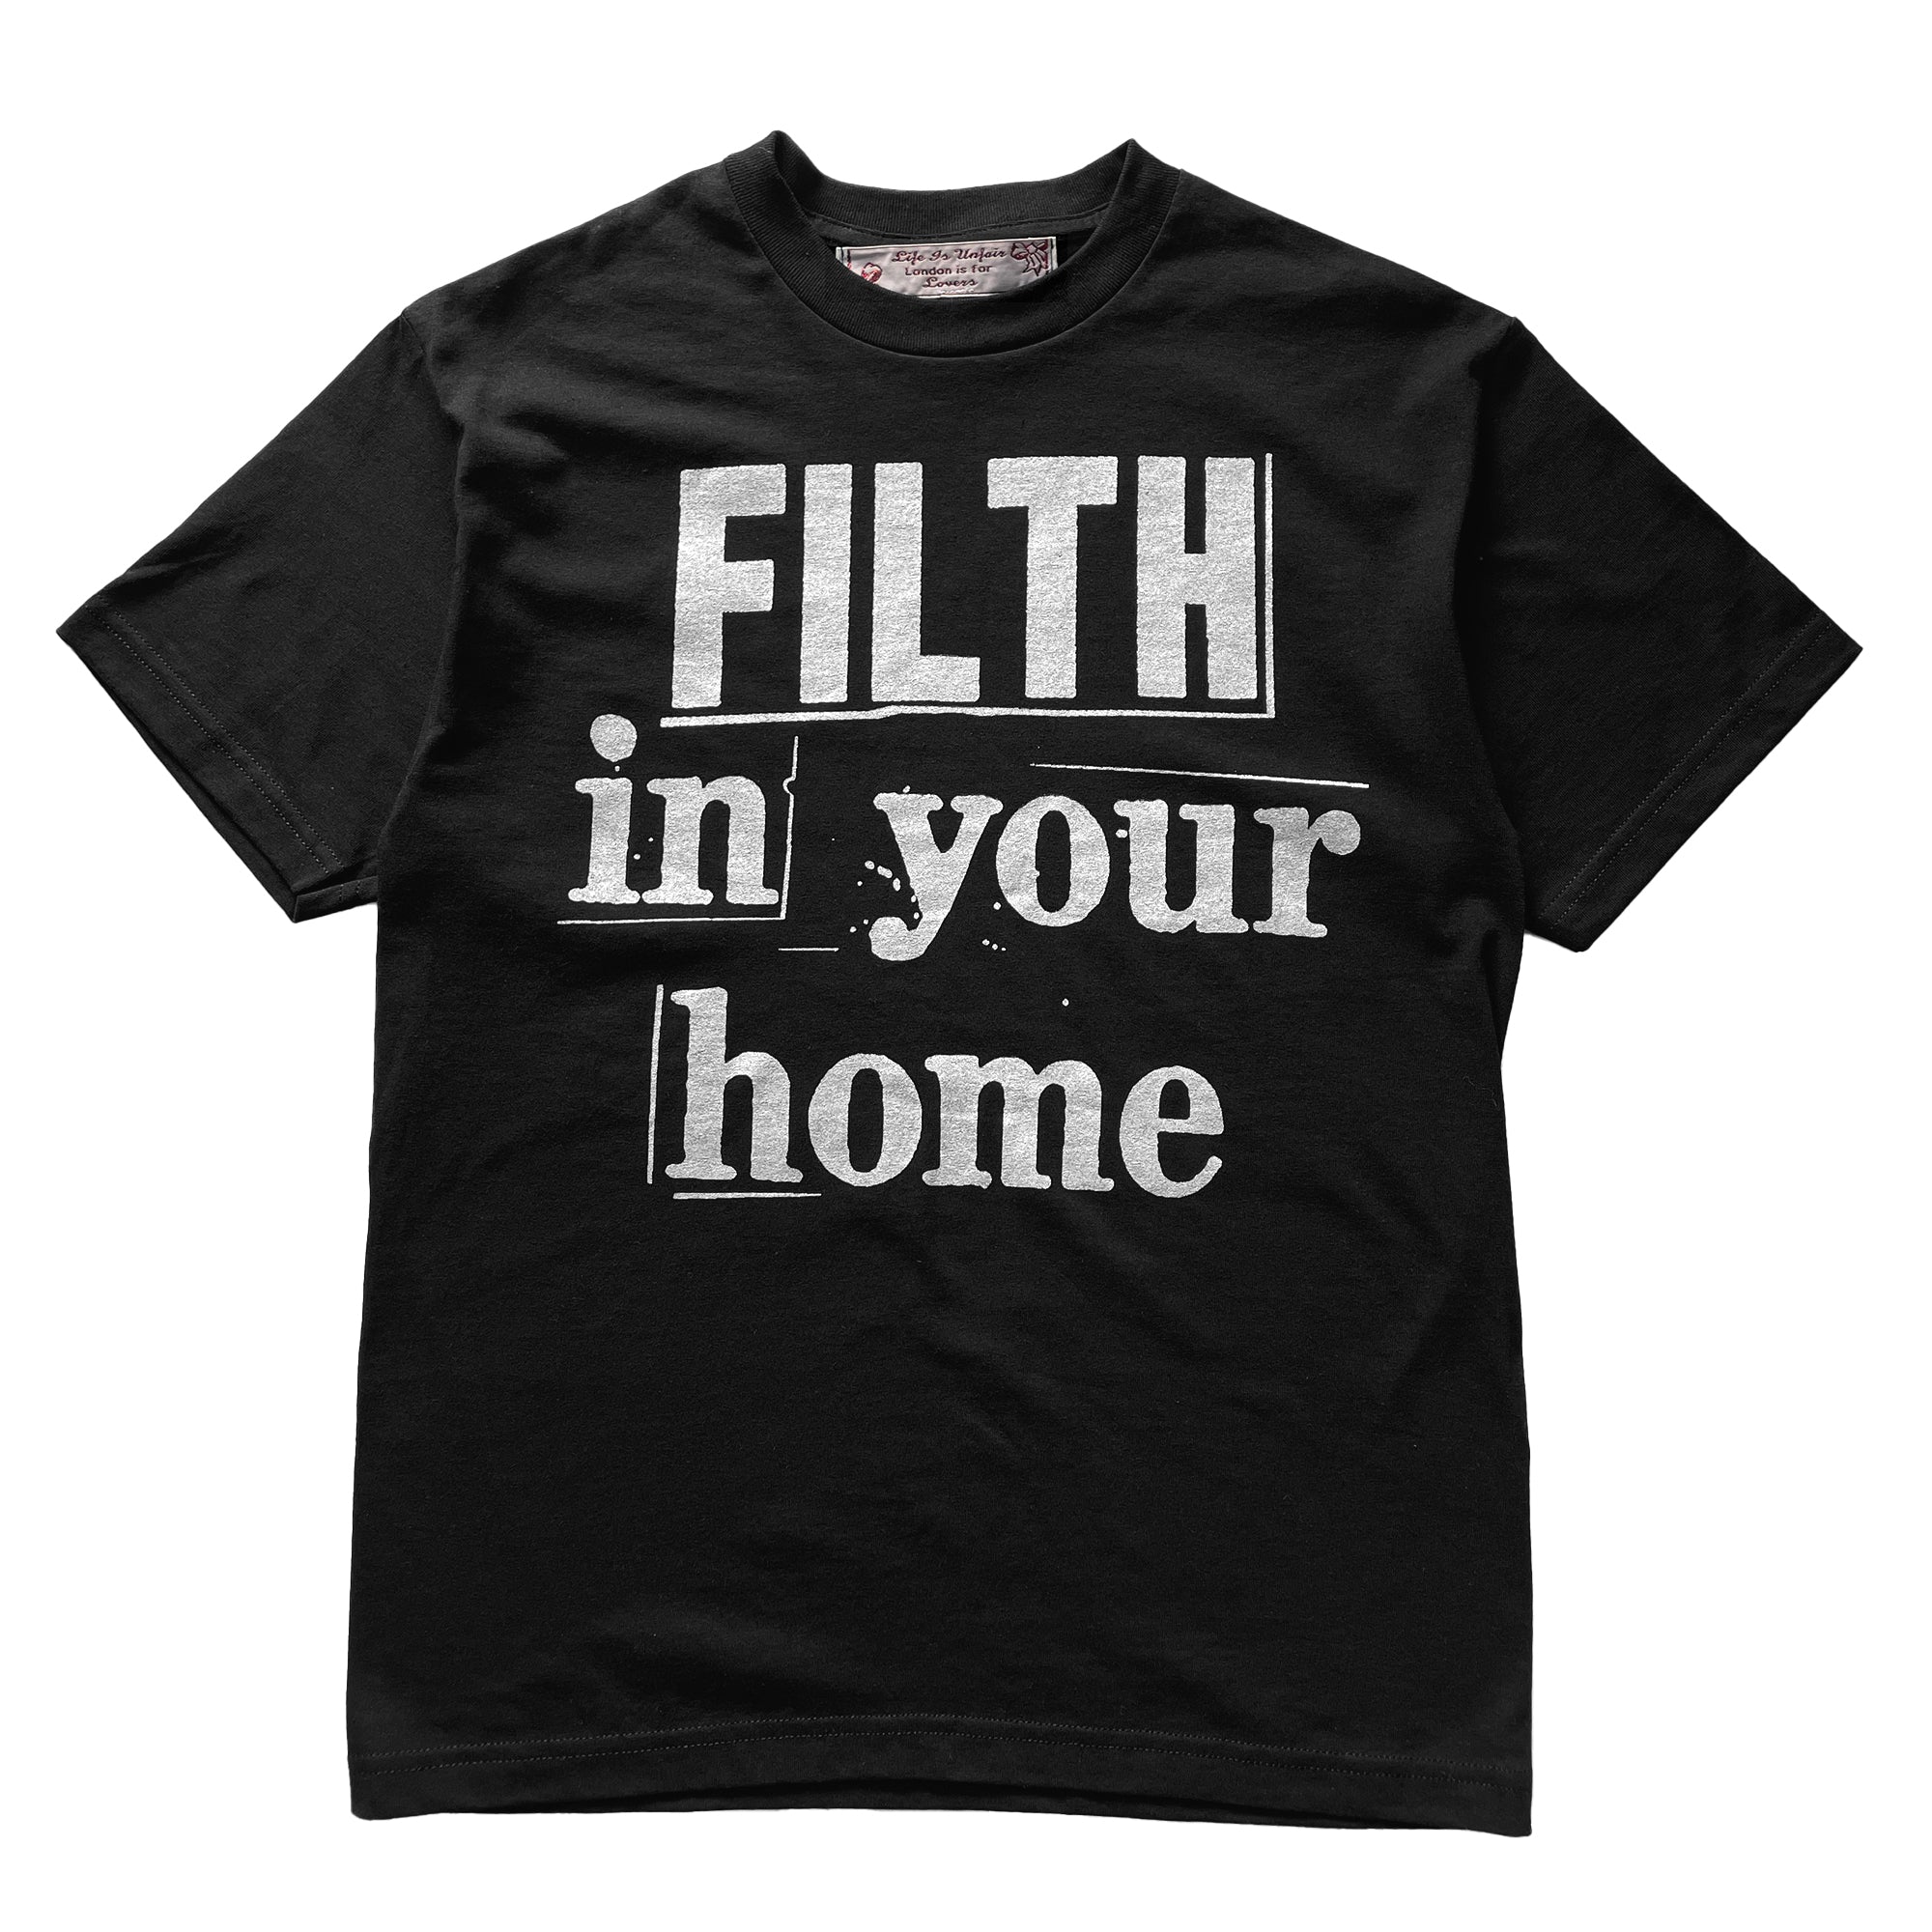 Filth T-shirt (Black)